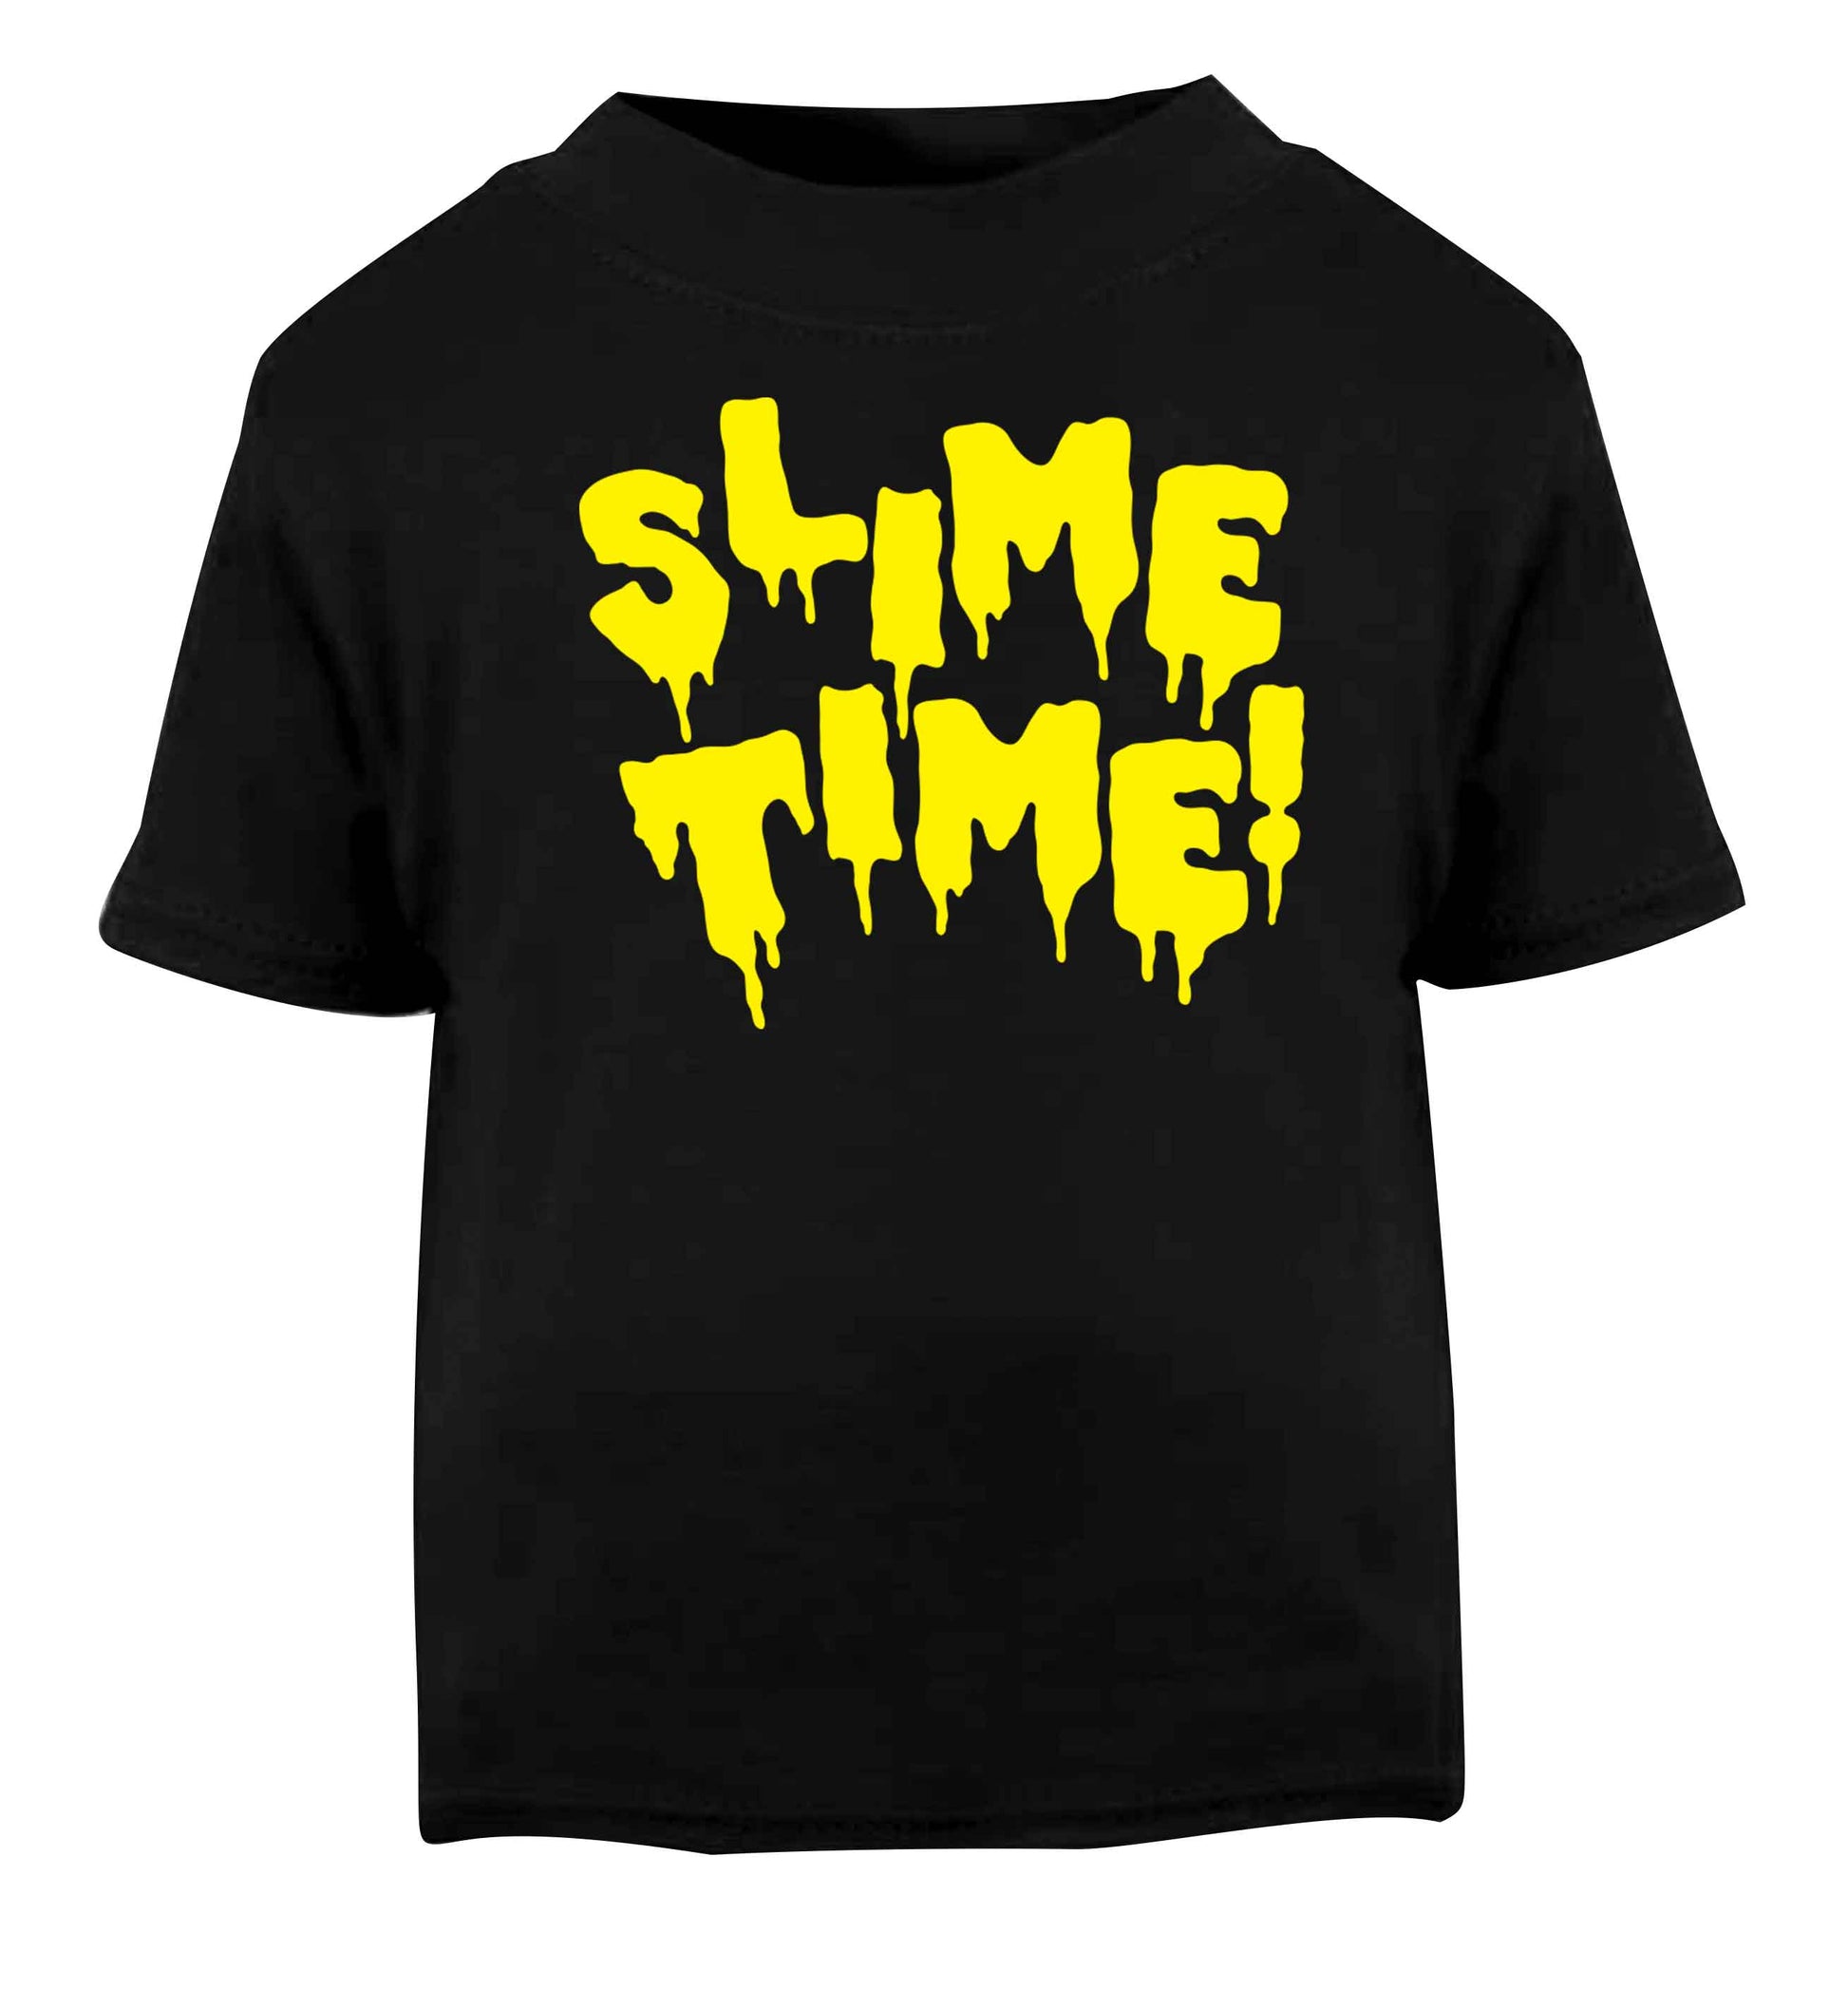 Neon yellow slime time Black baby toddler Tshirt 2 years